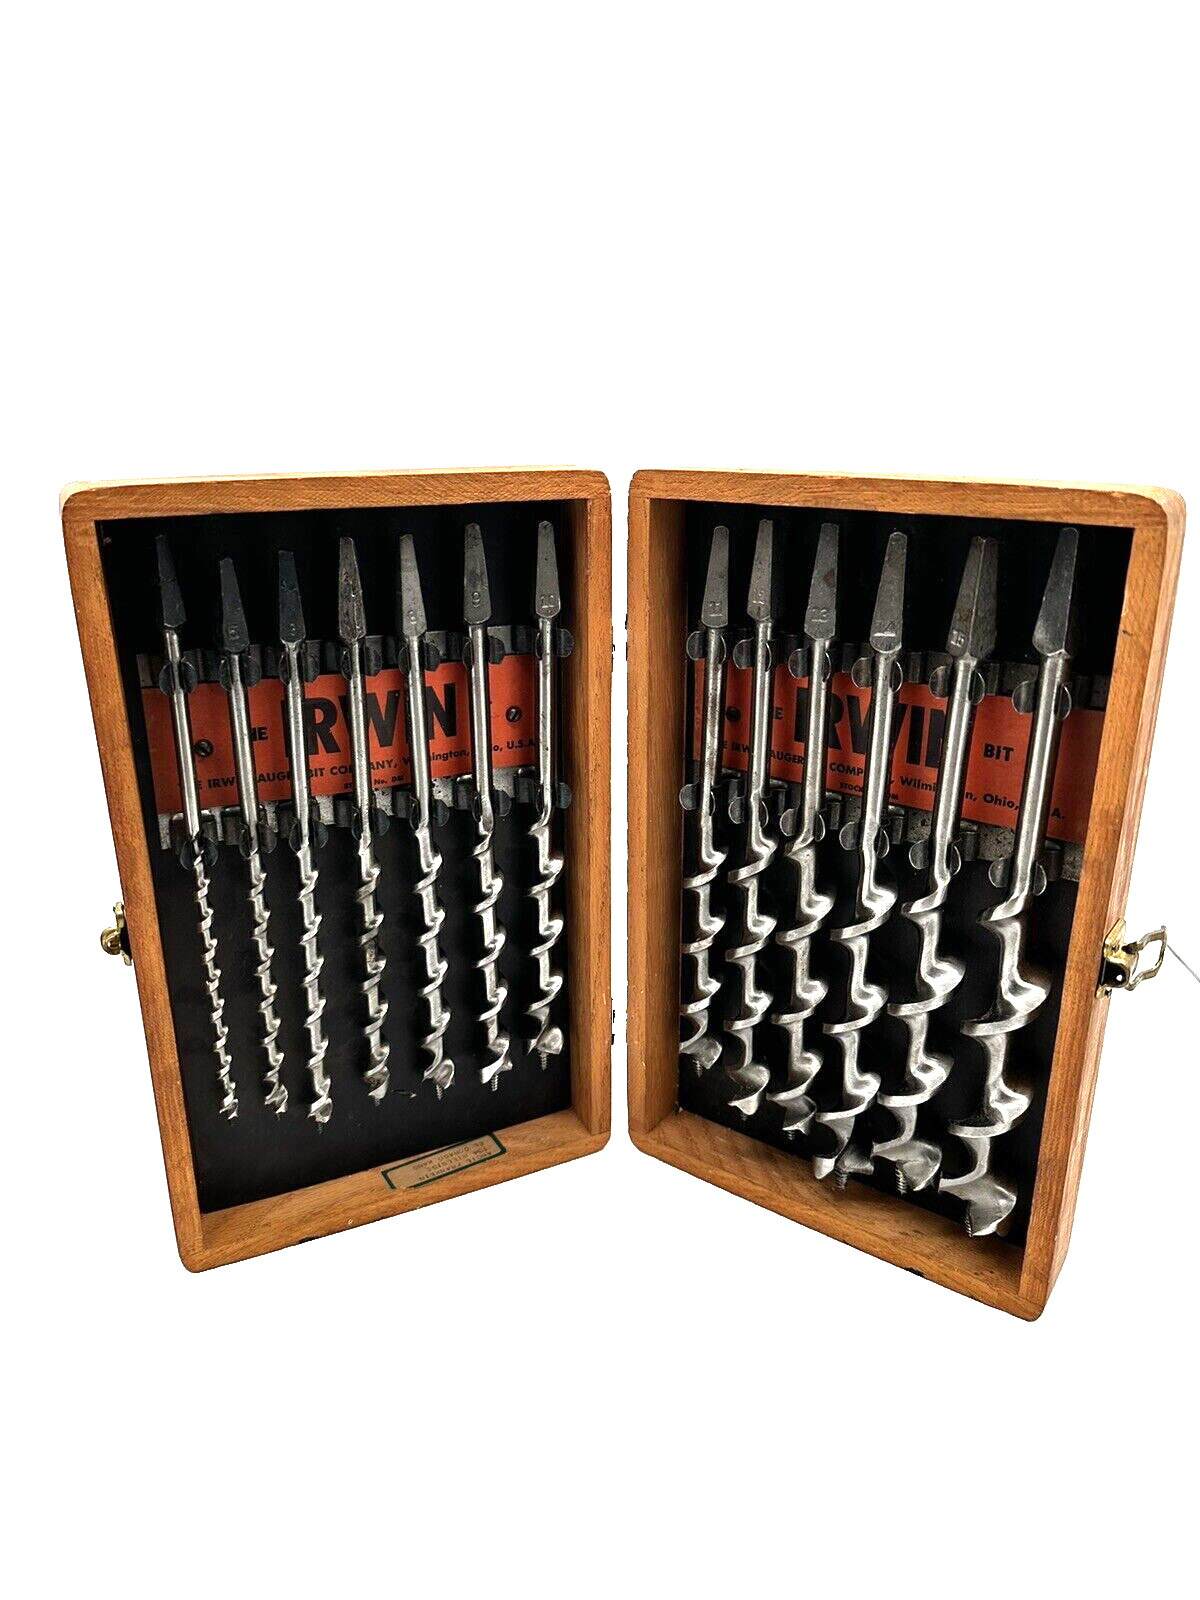 Vintage Irwin 13 Piece Auger Drill Bit Set With Wooden Box Sizes 4-16